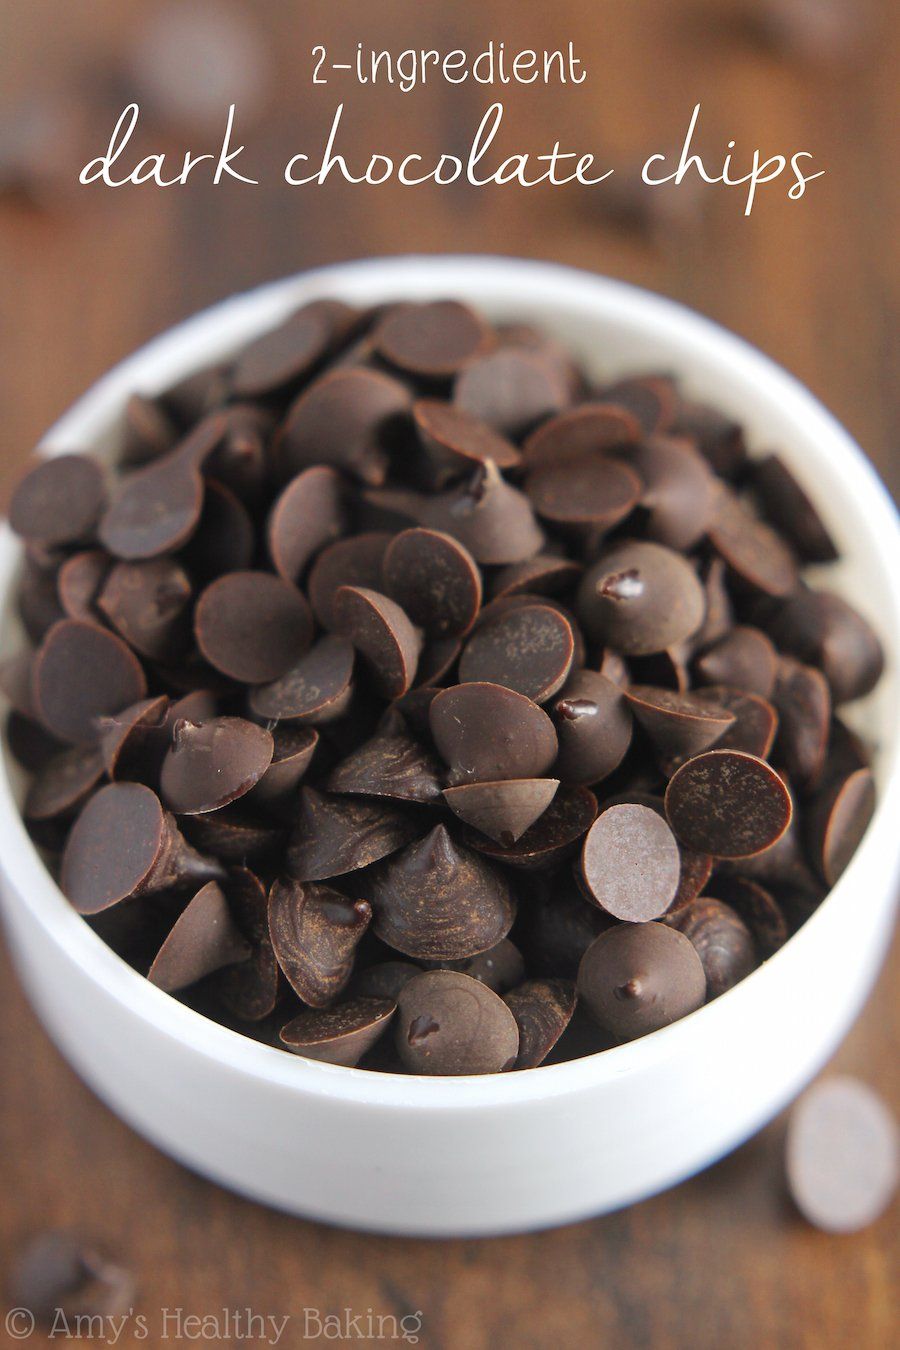 diy-dark-chocolate-chips_1972-cropped-labeled-2.jpg